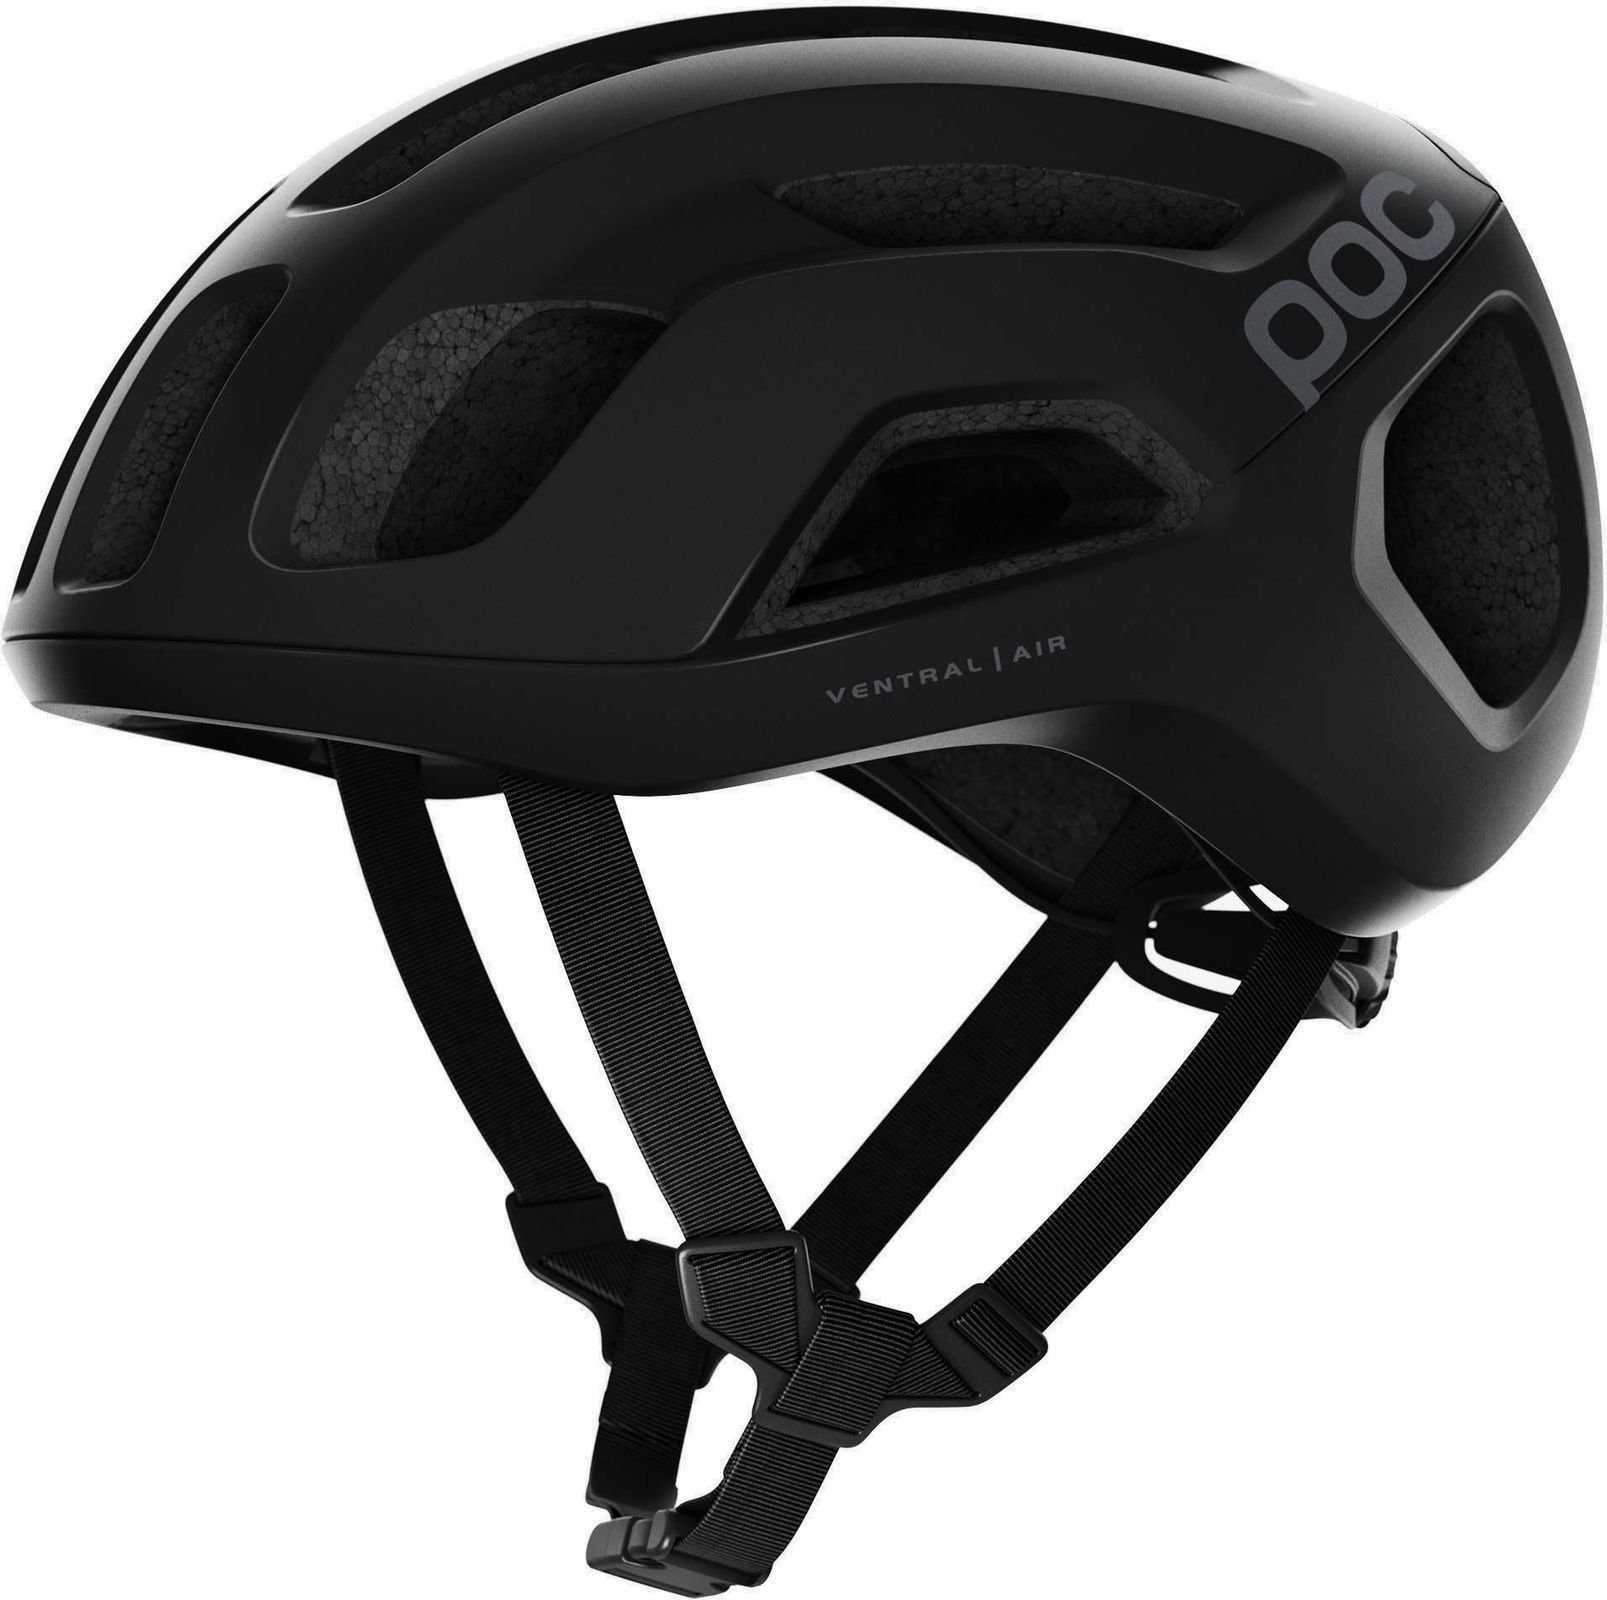 Cyklistická helma POC Ventral AIR SPIN Uranium Black Matt 54-59 Cyklistická helma